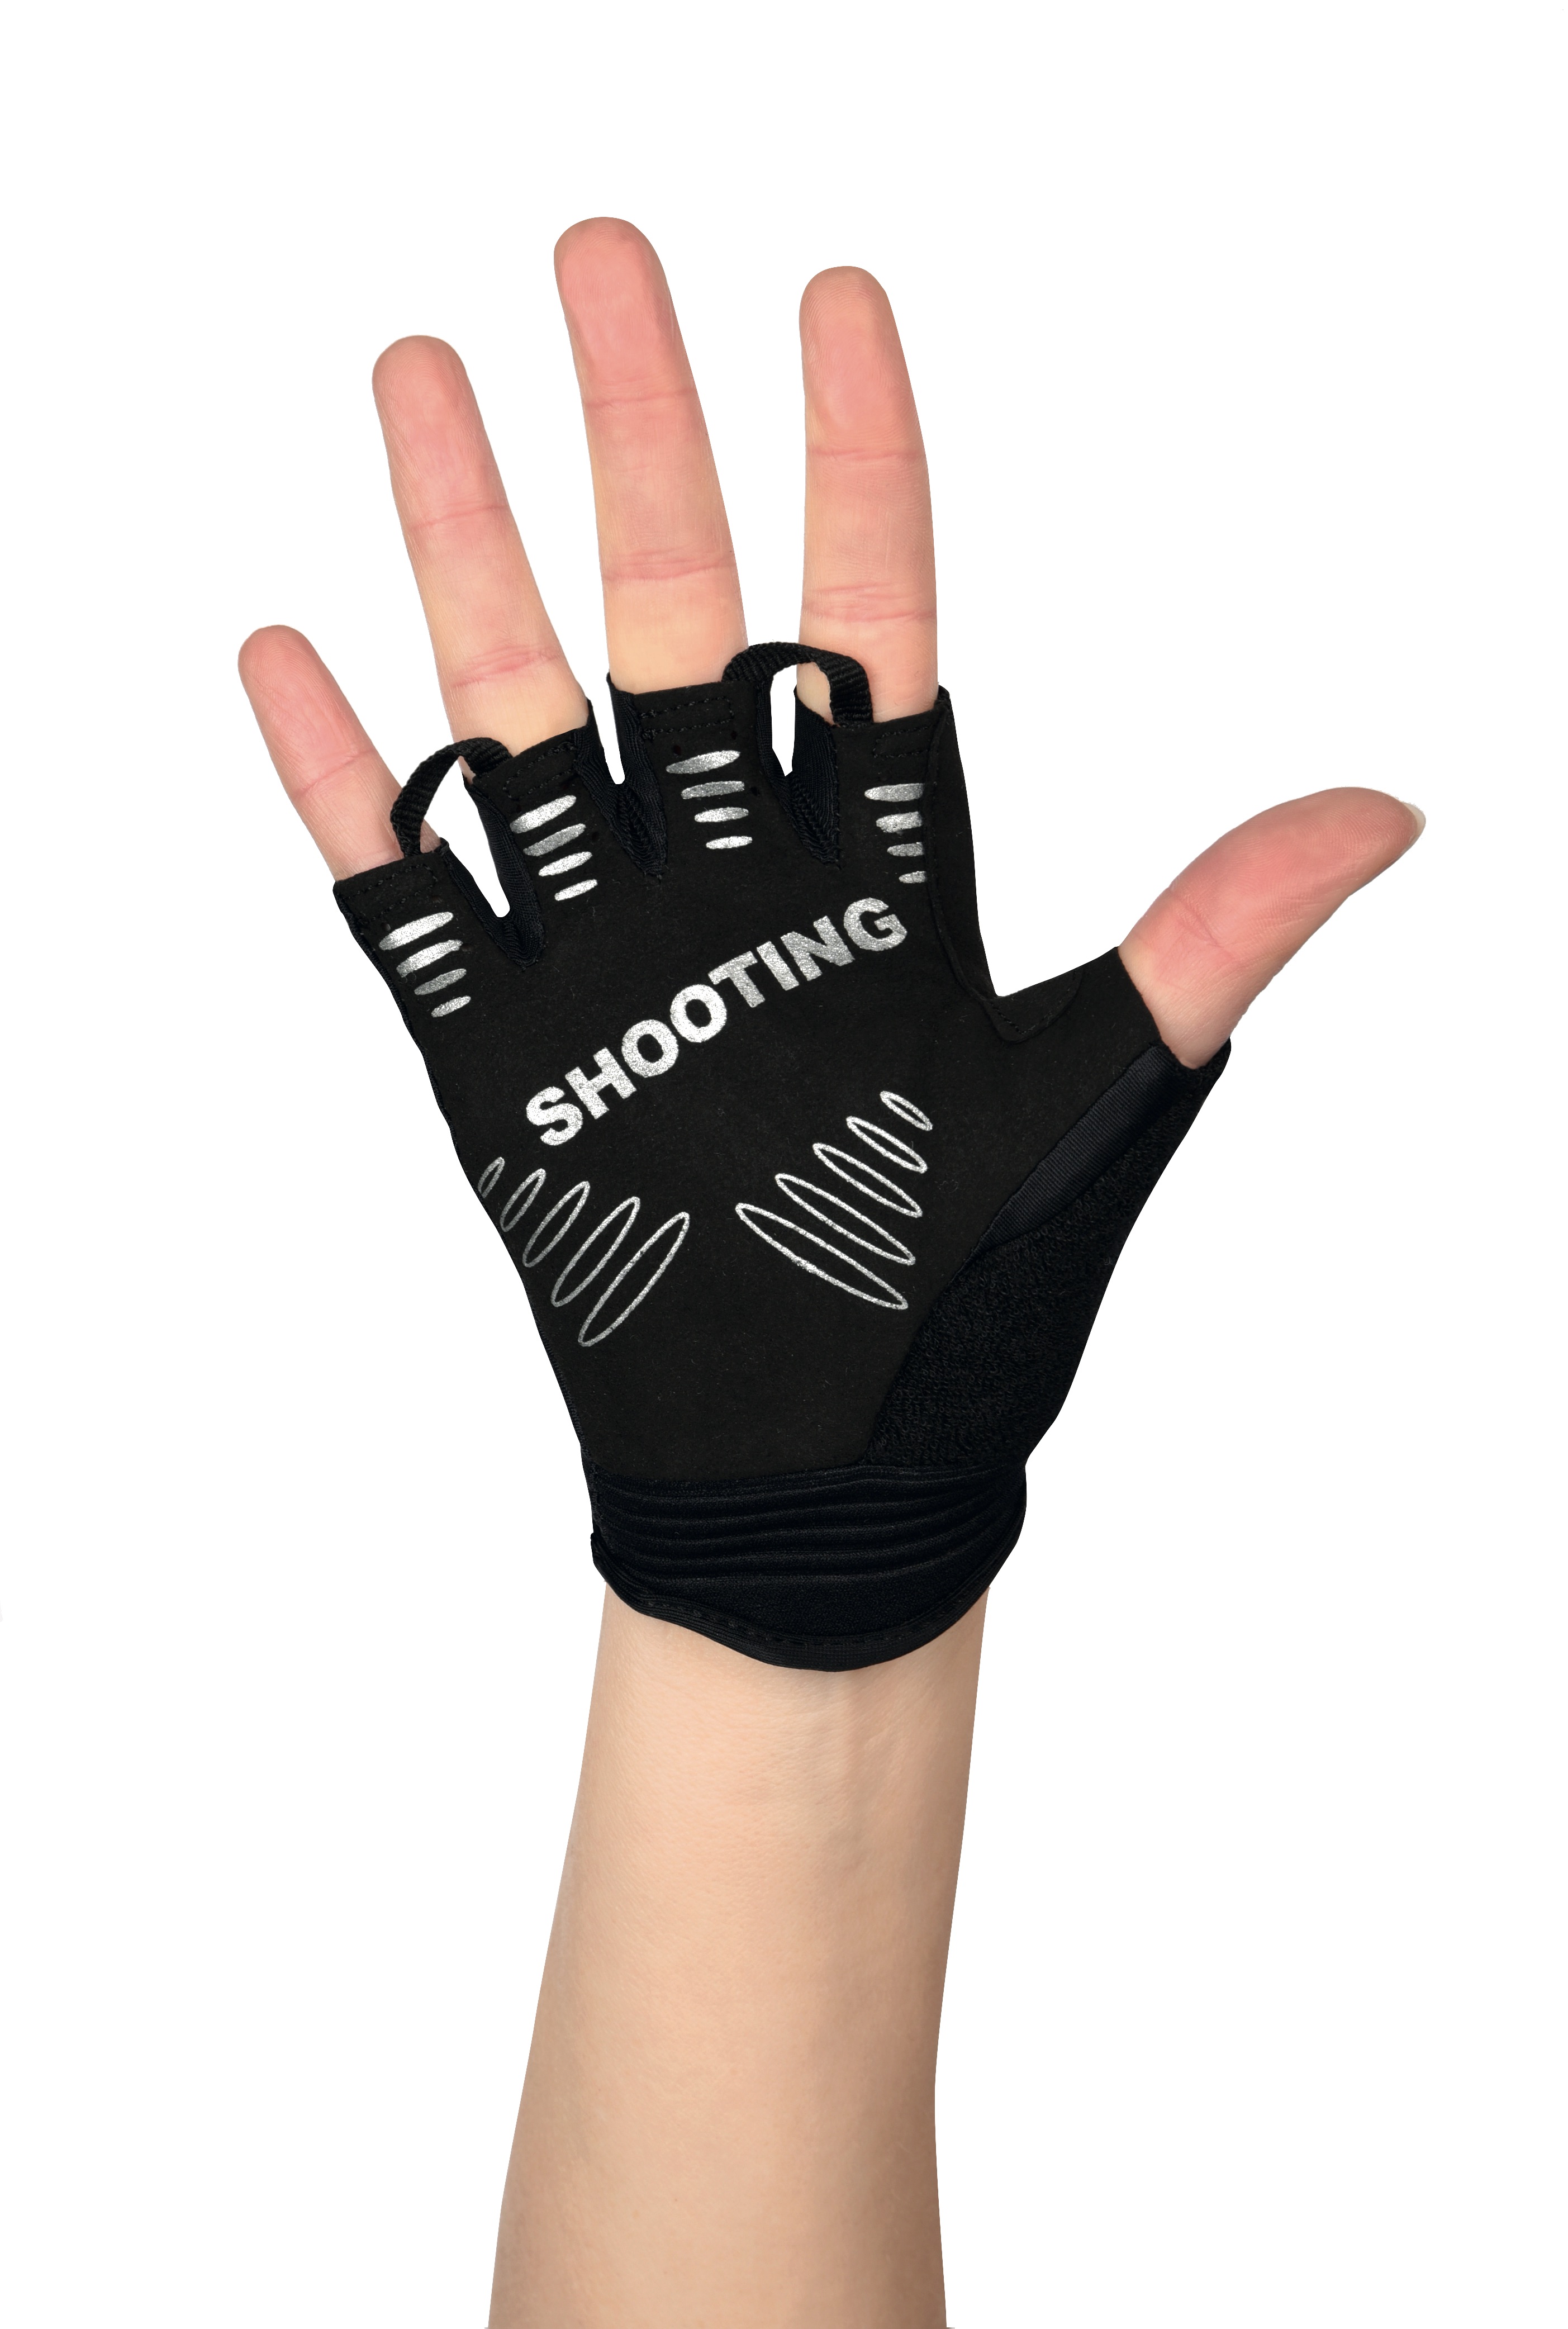 Sauer Trigger Hand Glove Contact IV - SauerShooting